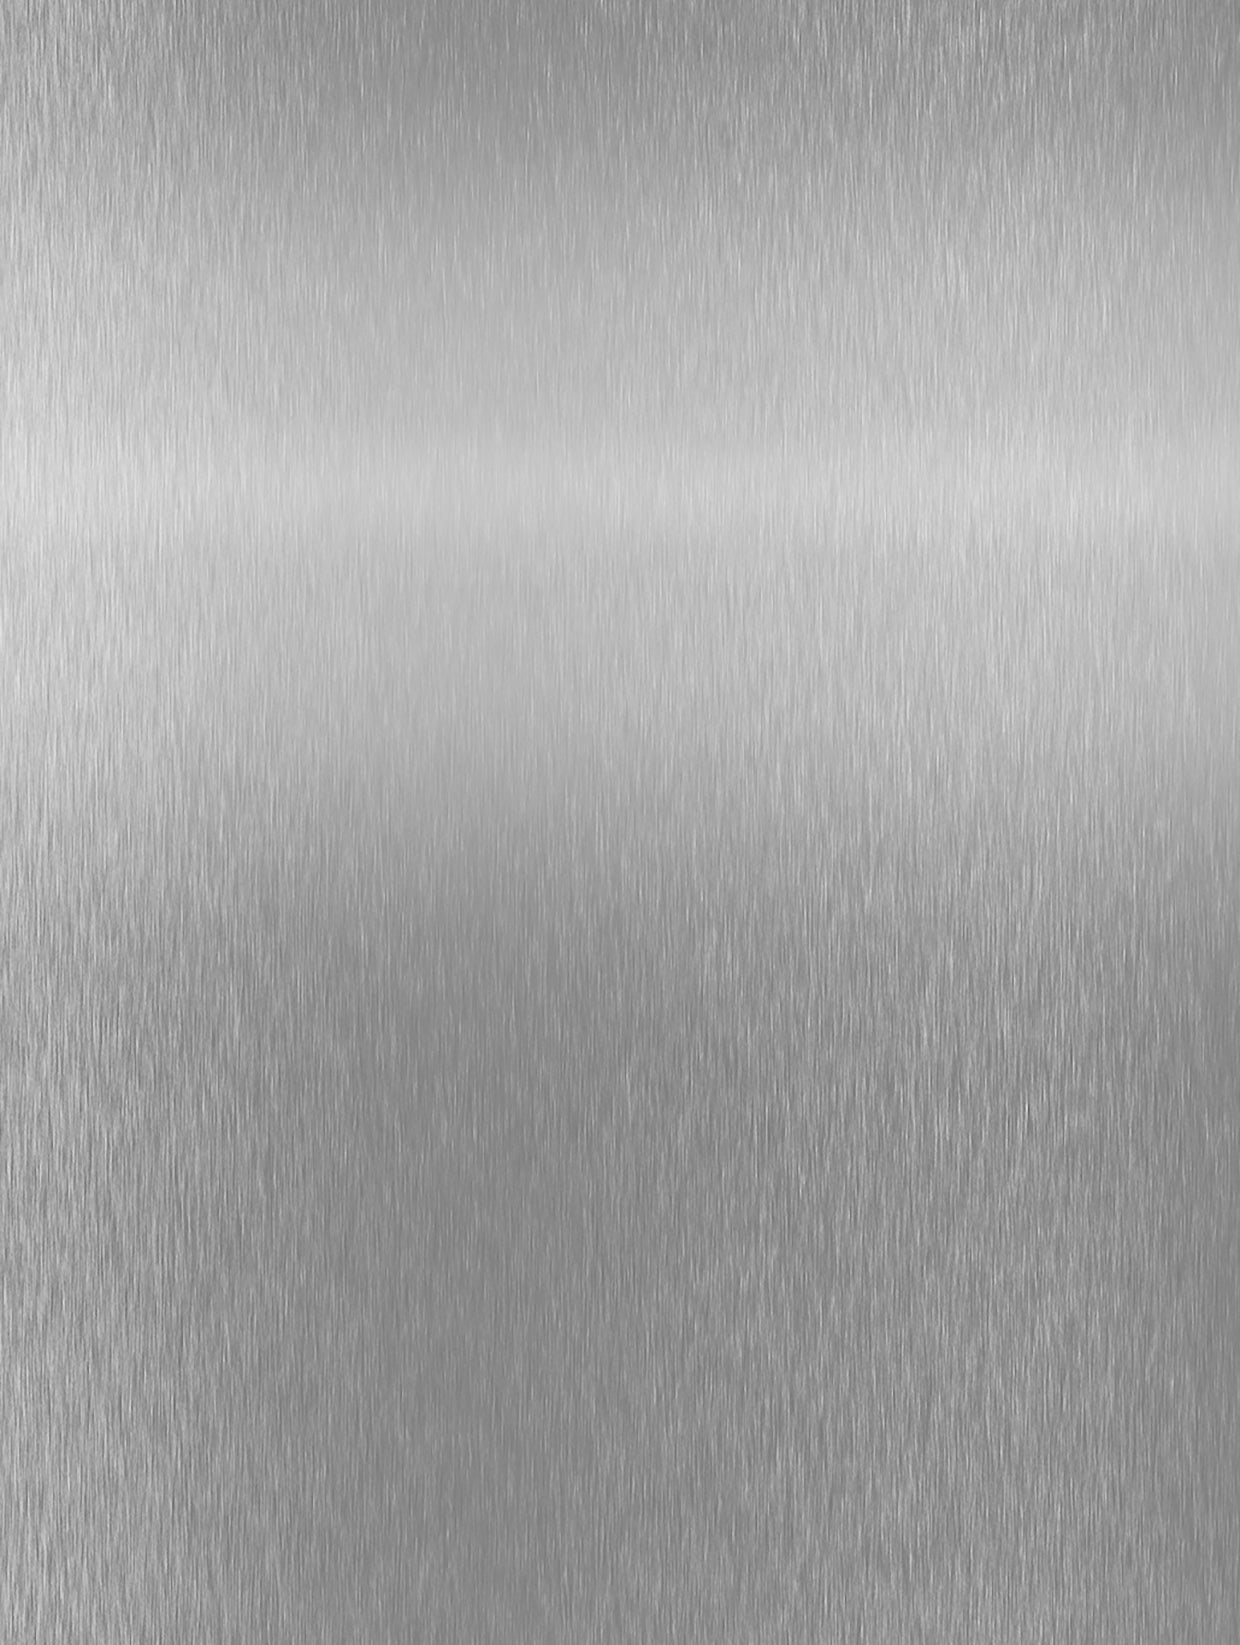 Steel-Brushed Prestige | Metalldekor Gebürstet Soft - Möbelfolie Selbstklebende Tapete Vinyl Folie für Möbel Wand Regal (100x122cm)